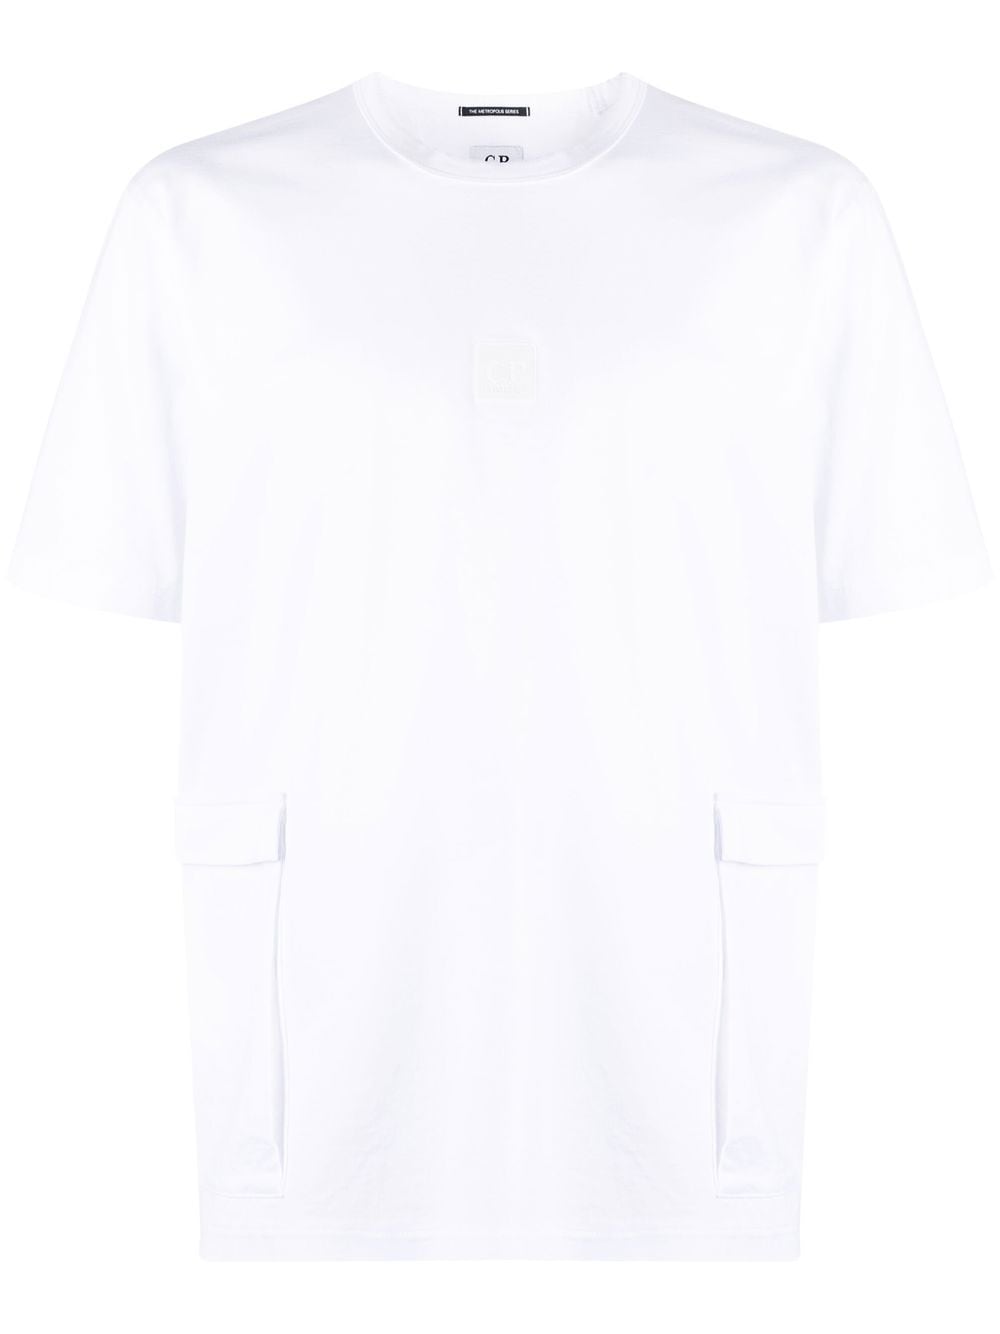 C.P. Company cargo pocket cotton T-shirt - White von C.P. Company